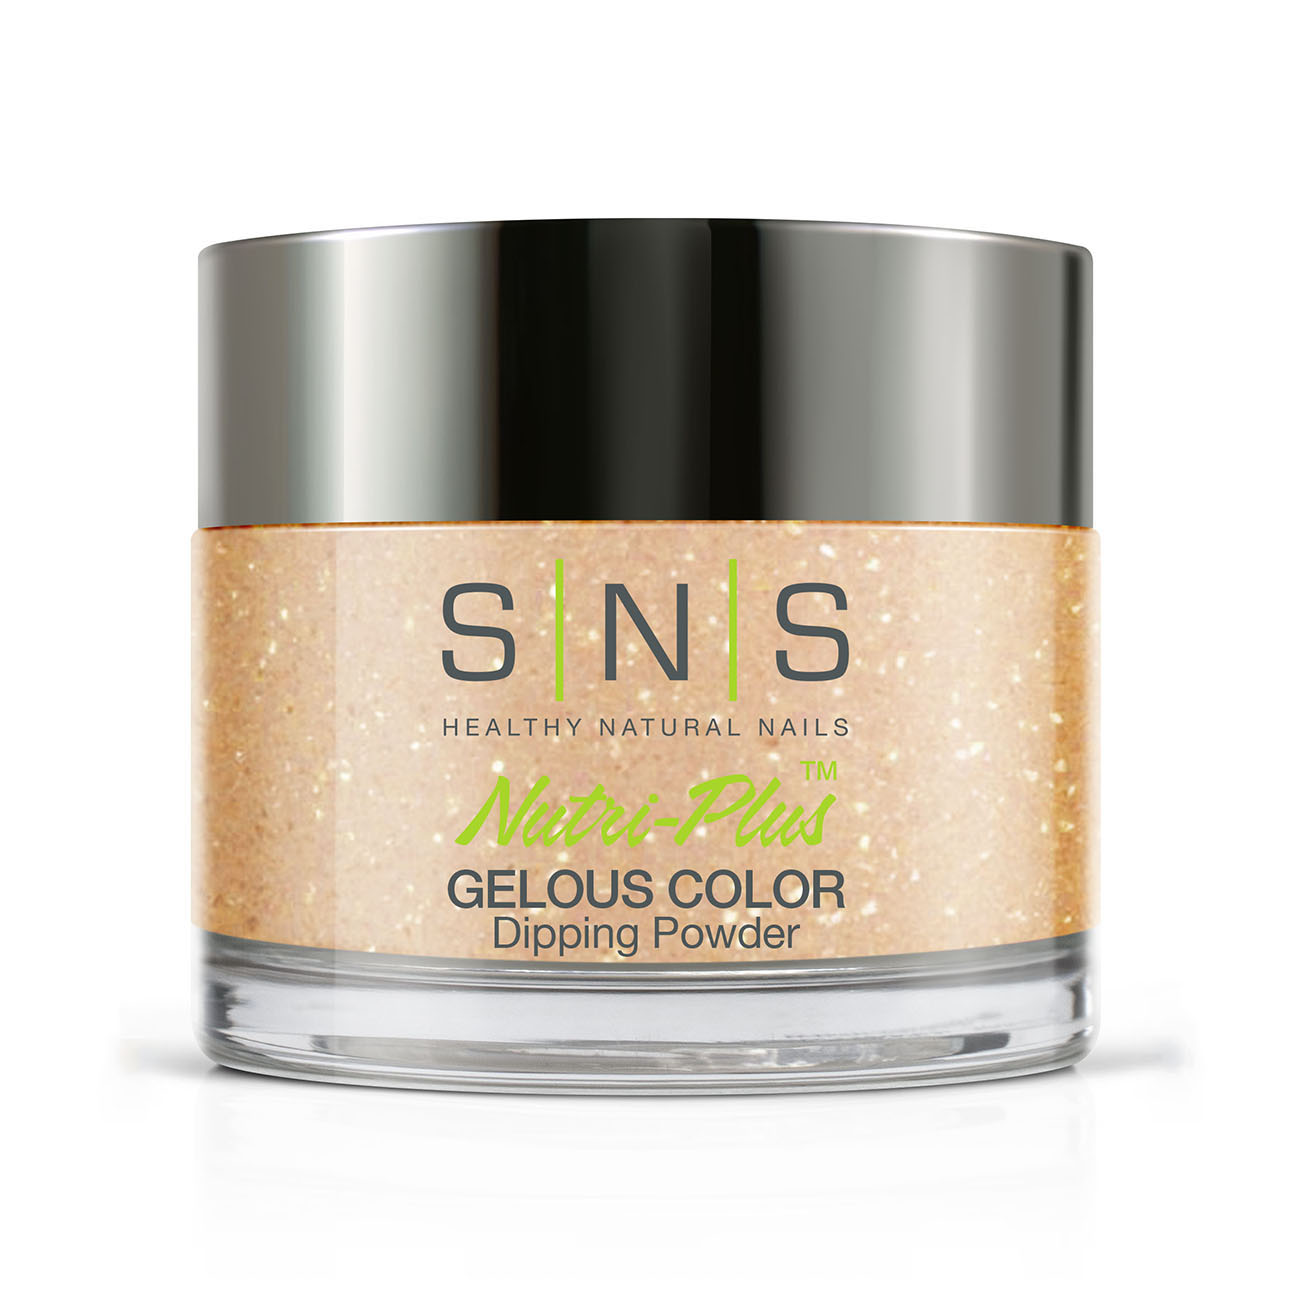 SNS Nails BC03 Intellectual Property 28g (1oz) | Gelous Dipping Powder